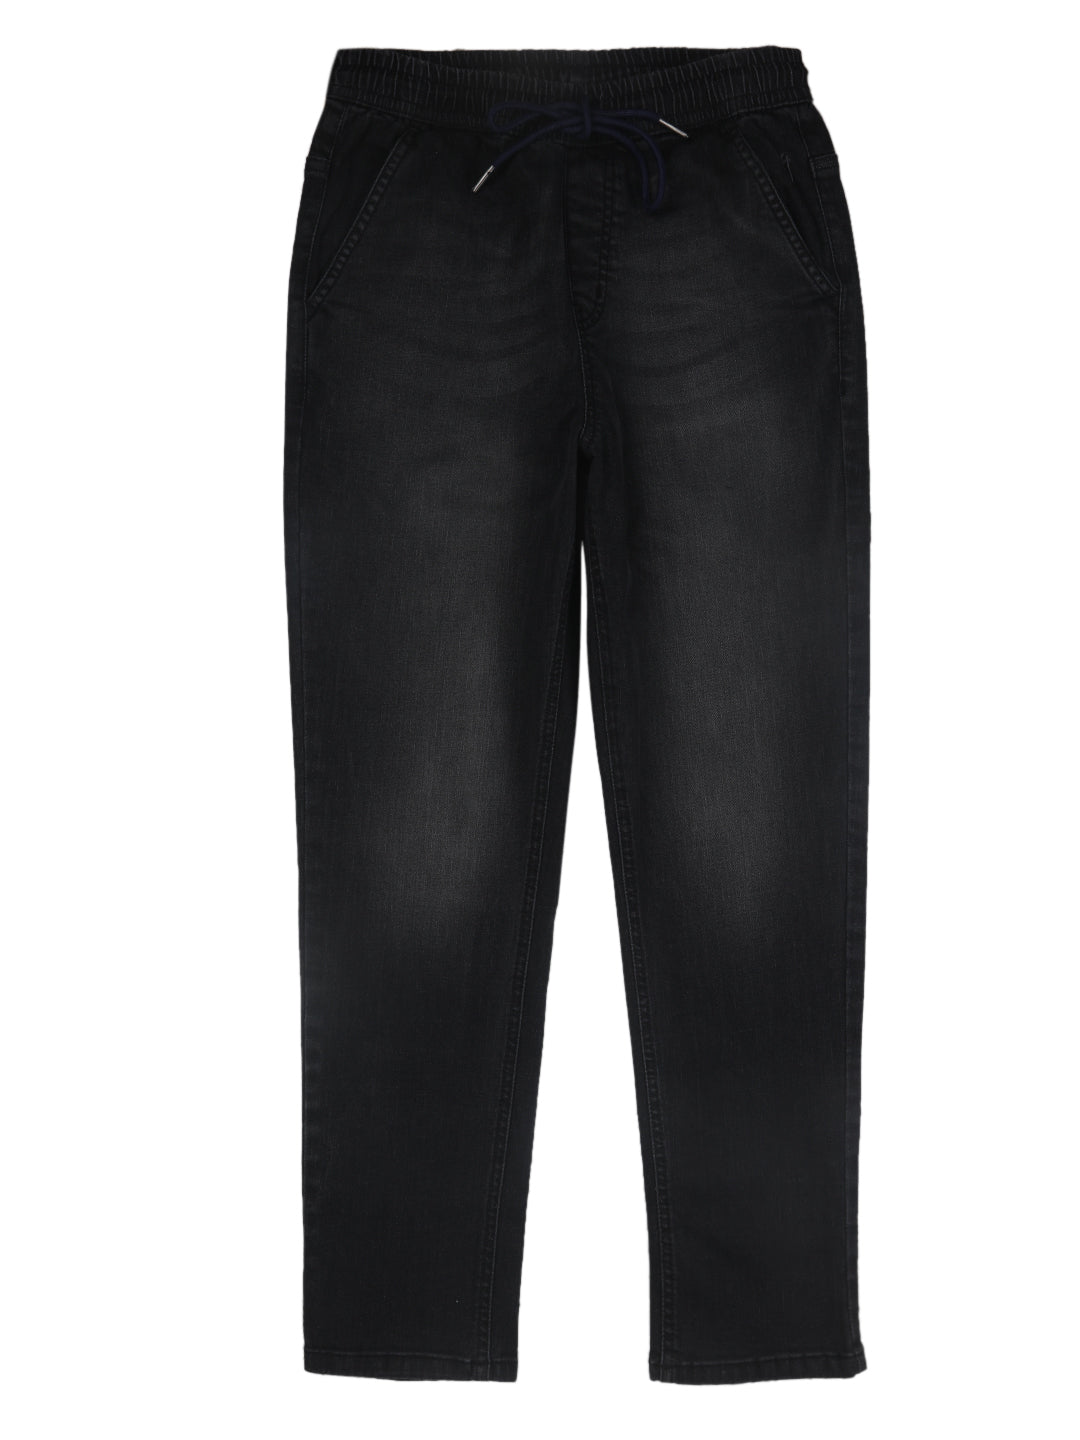 Boys Black Denim Solid Elasticated Jeans